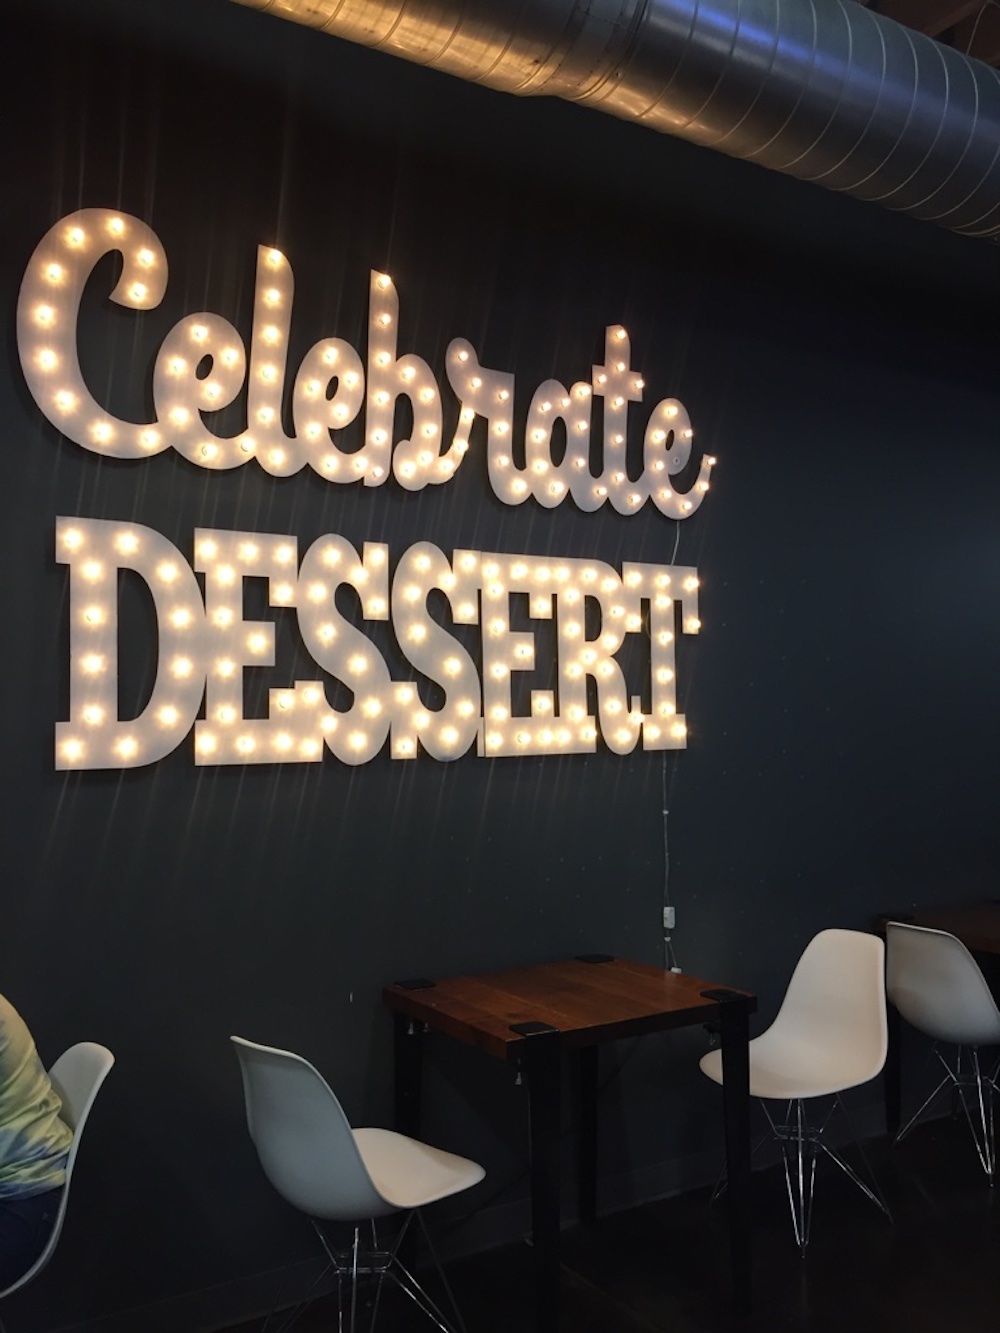 Sign made of lights reading Celebrate Dessert in the dining room of Milkfloat in Wichita, Kansas